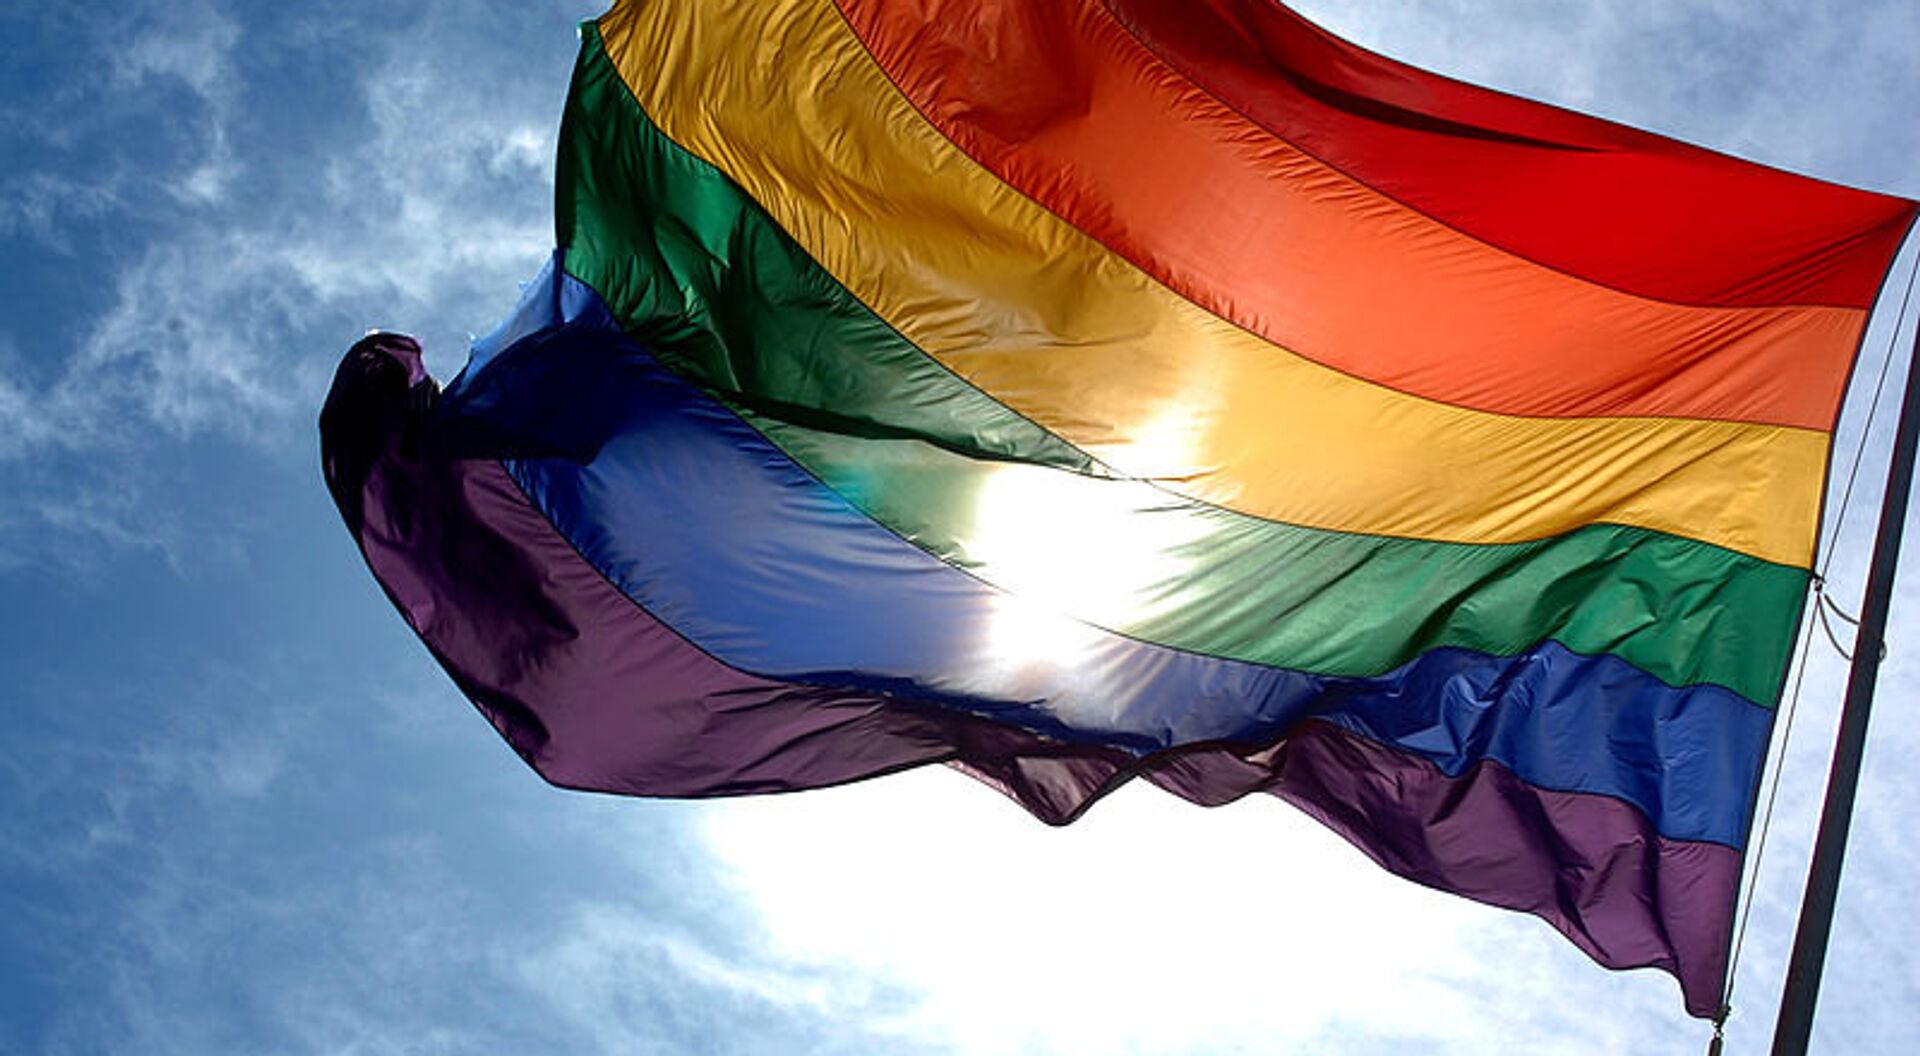 Gay pride flag - Sputnik International, 1920, 08.06.2017